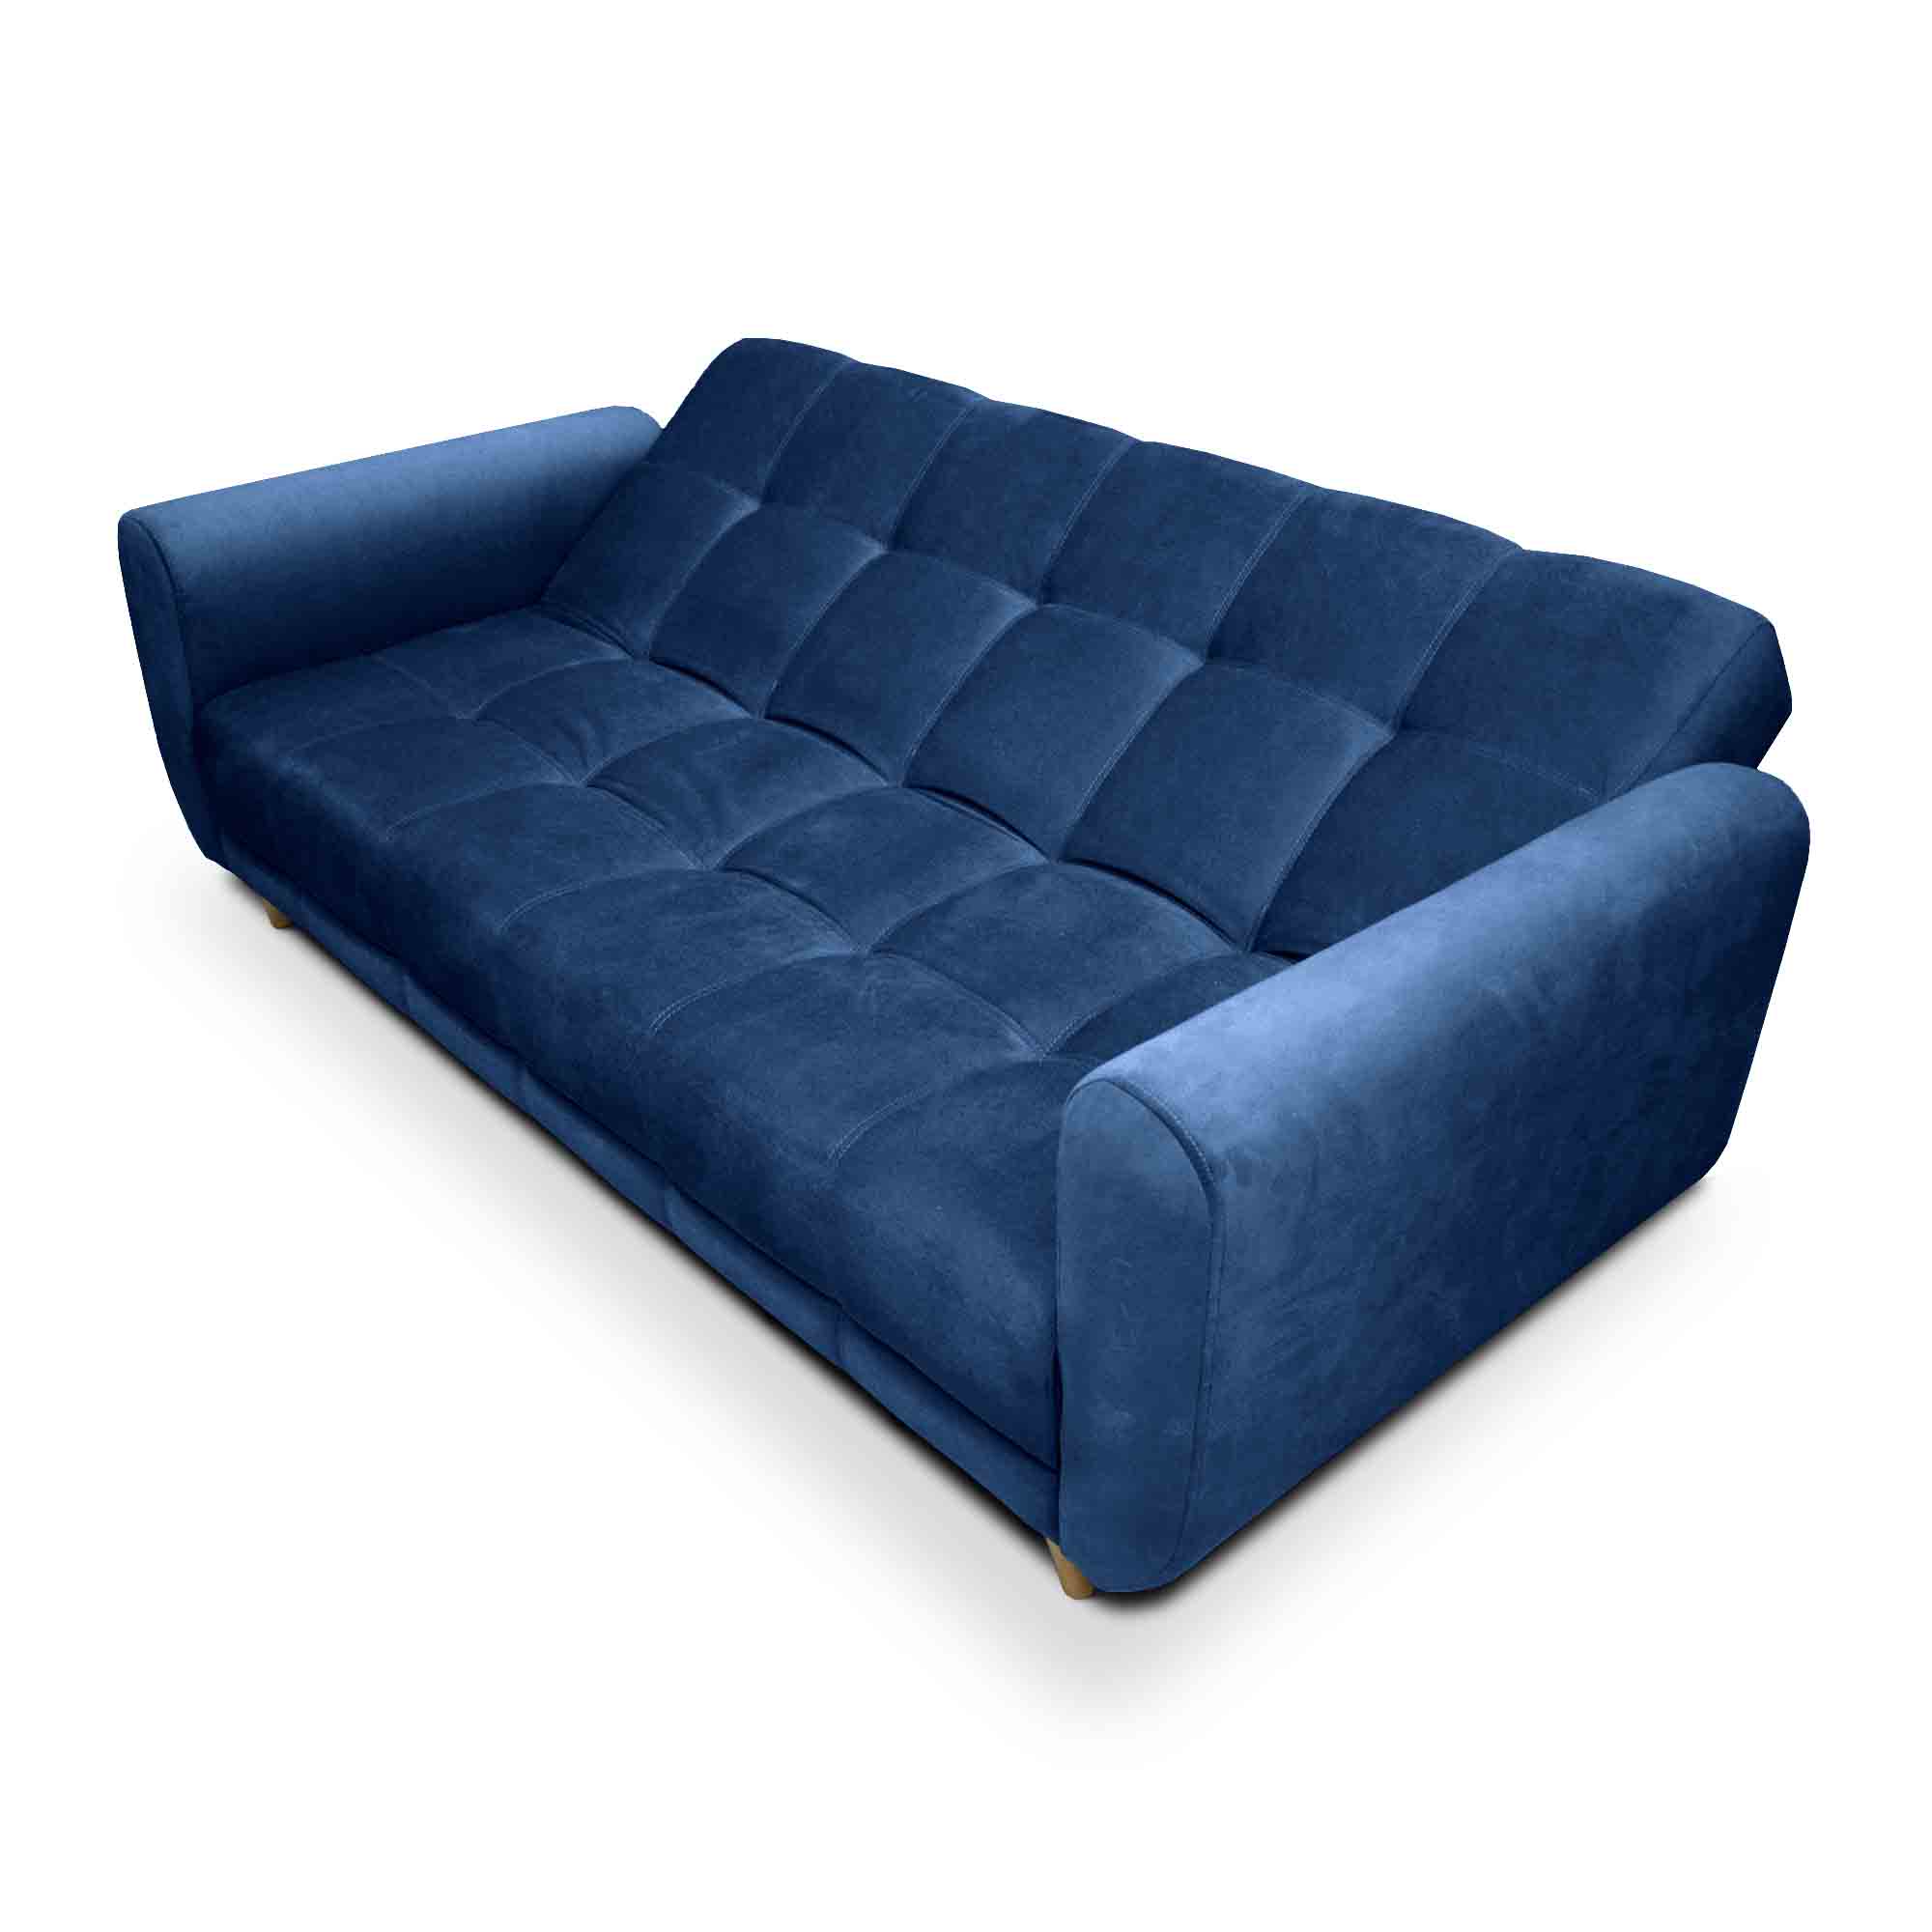 Sofa Cama Comfort Sistema Clic Clac Azul Turqui